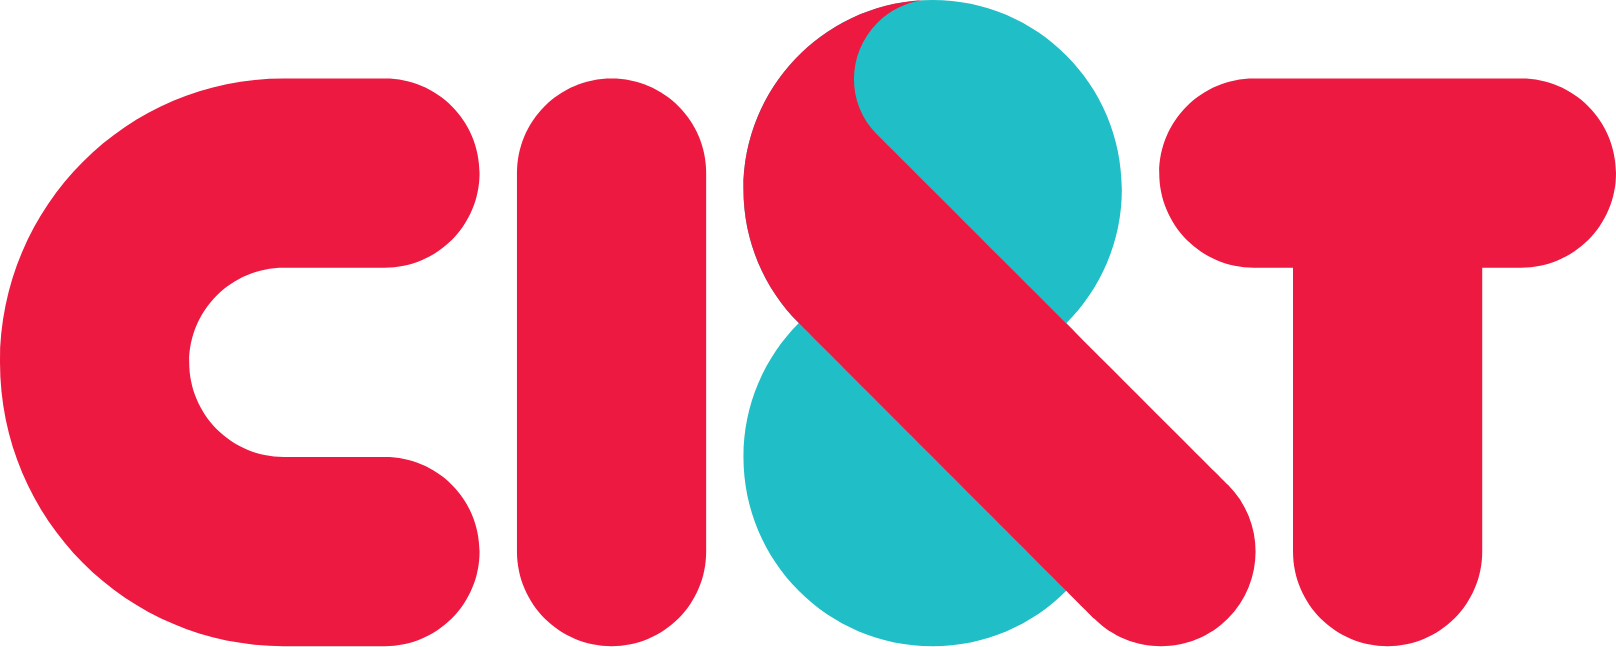 CI&T logo large (transparent PNG)